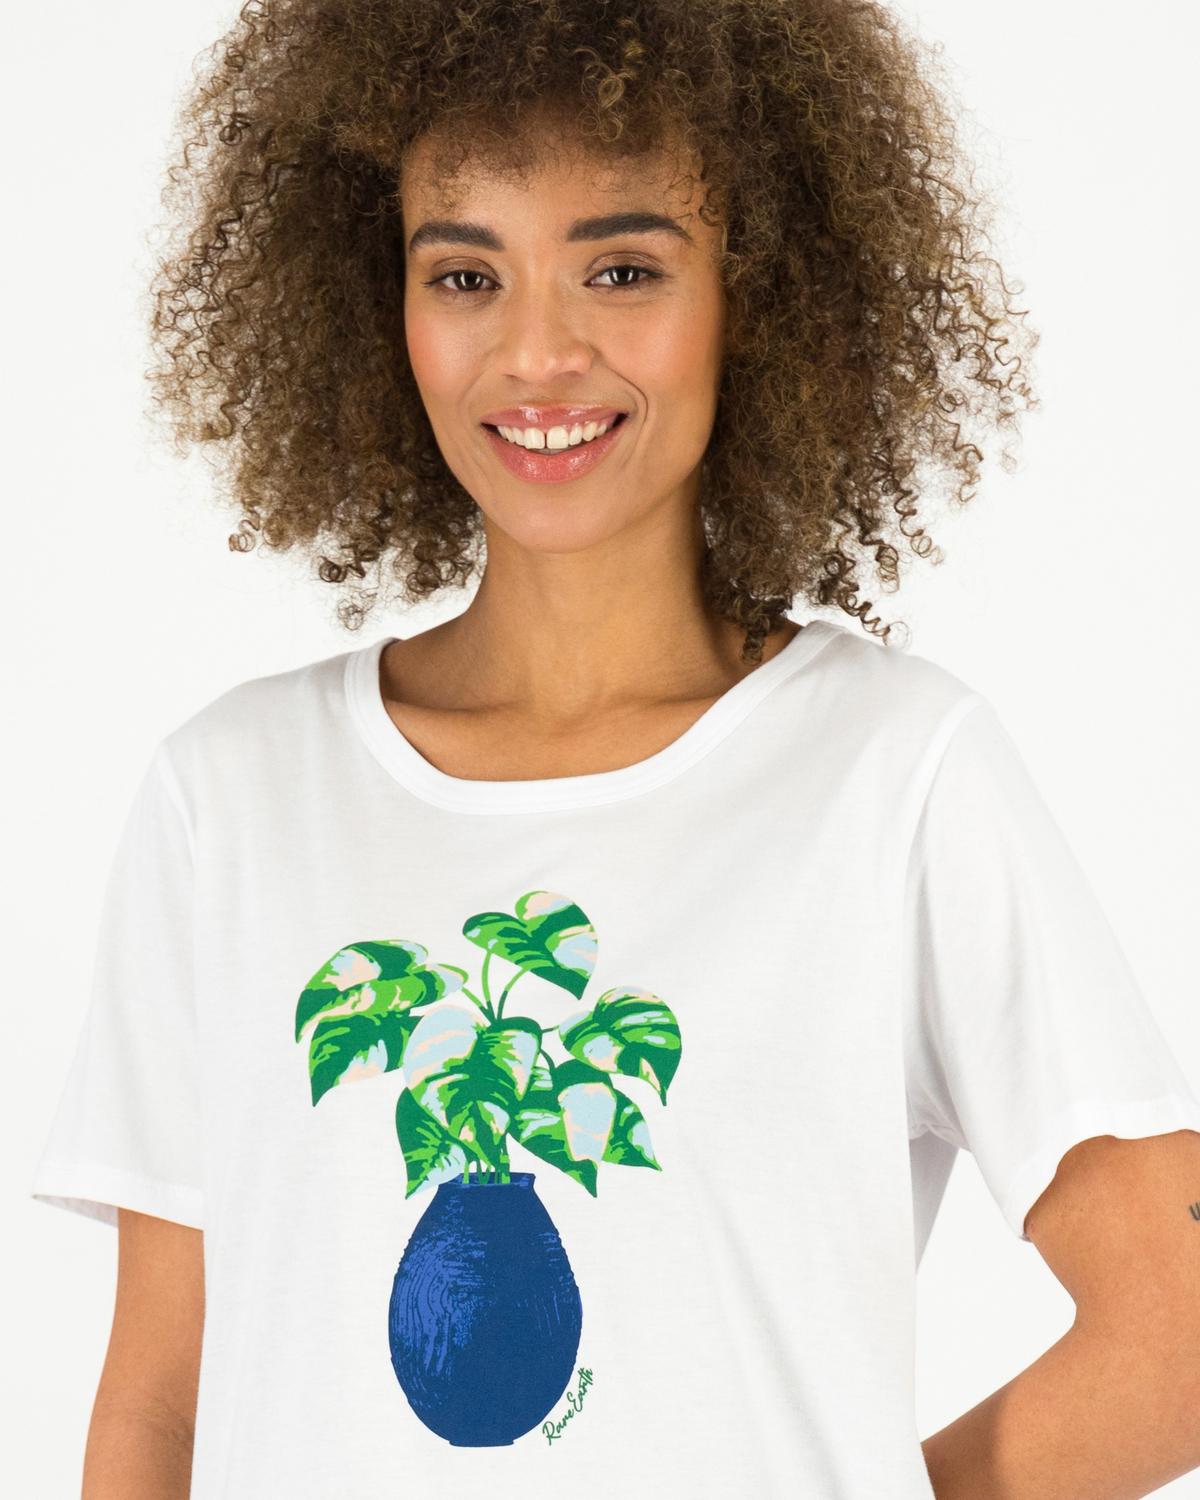 Rare Earth Women's Monet Graphic T-shirt -  White